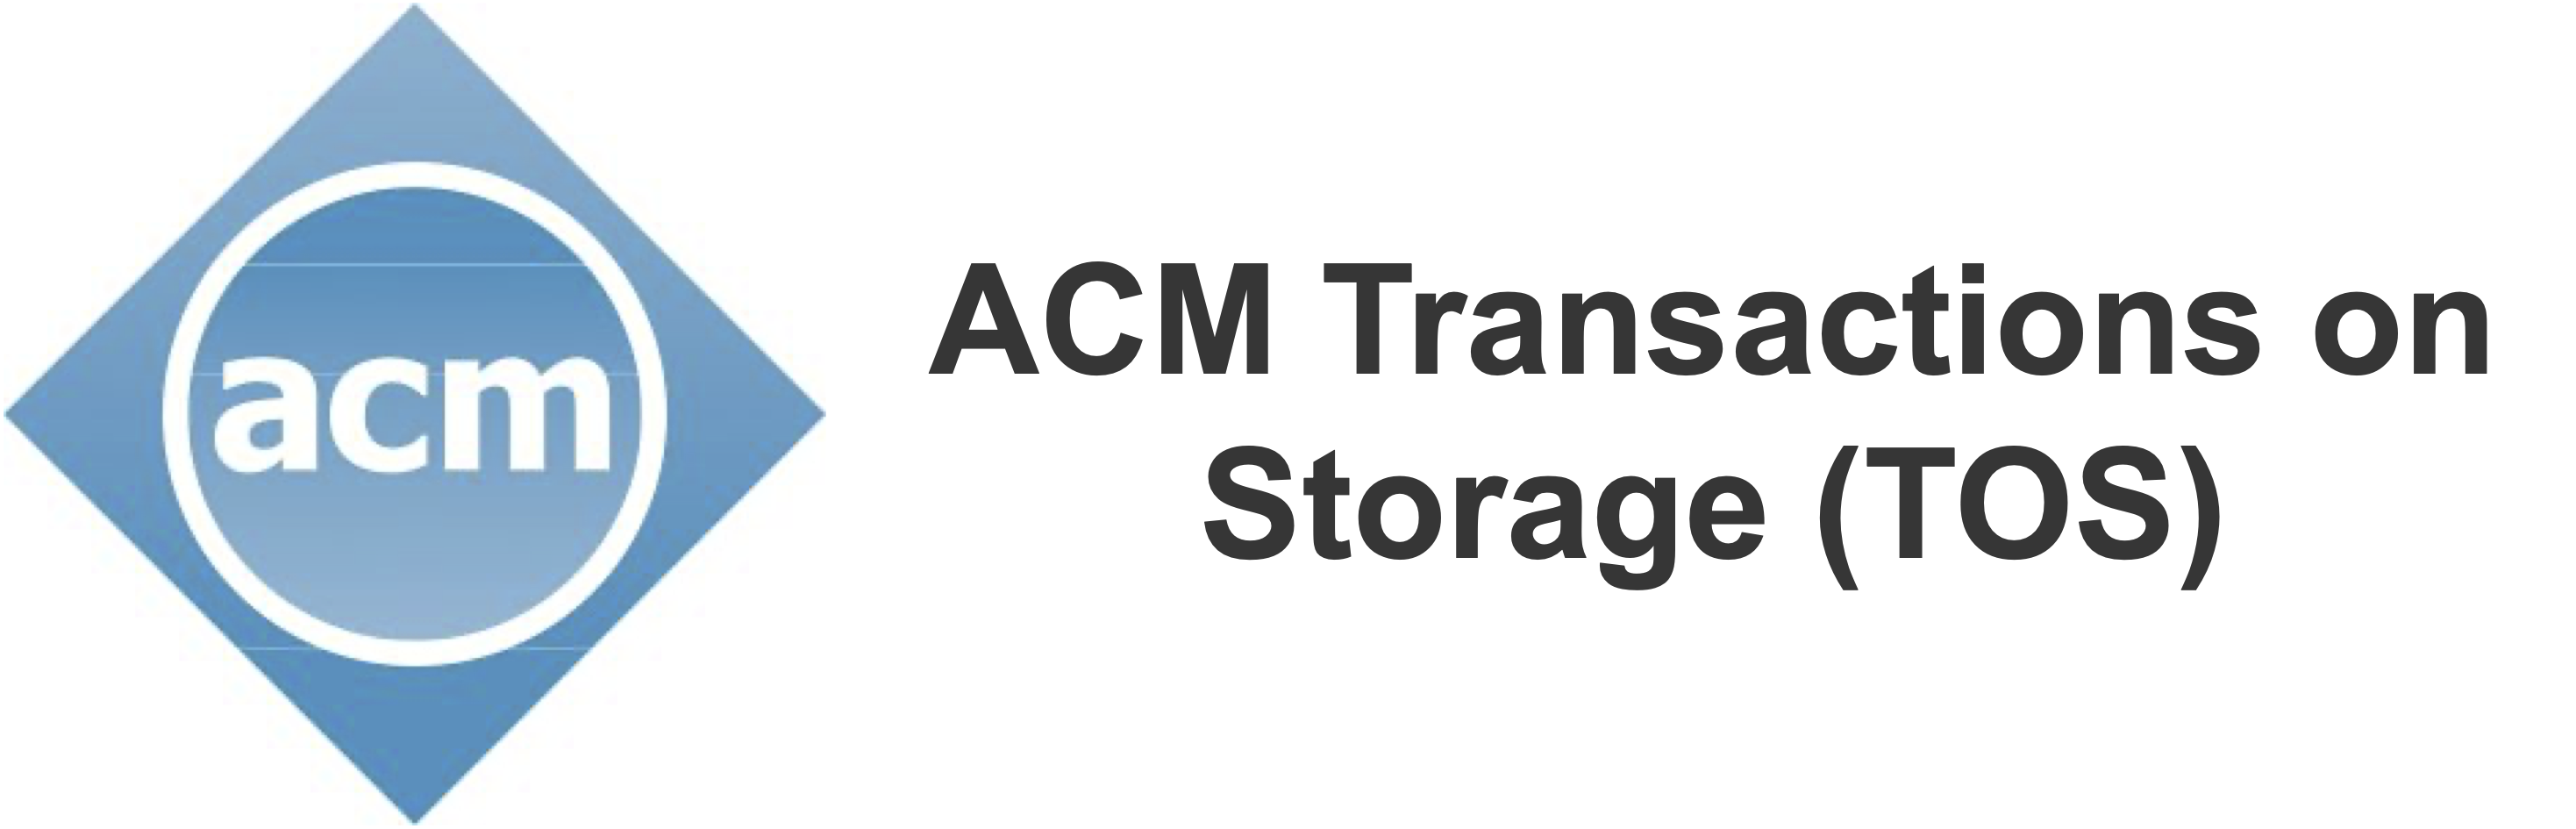 ACM Transactions on Storage (TOS)